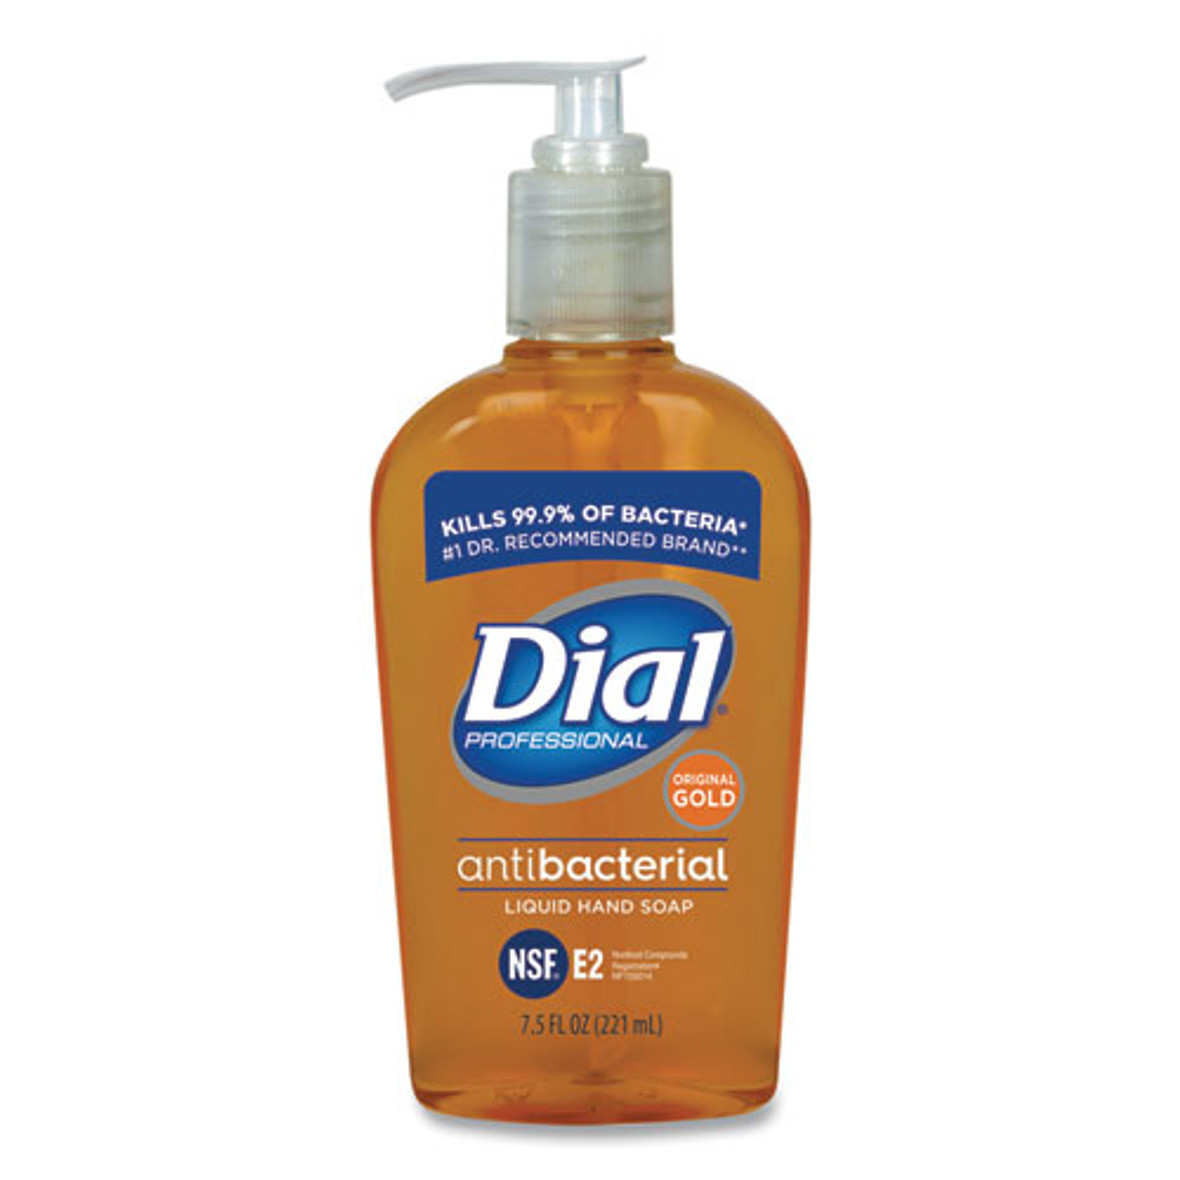 Dial® Professional Gold Antibacterial Liquid Hand Soap